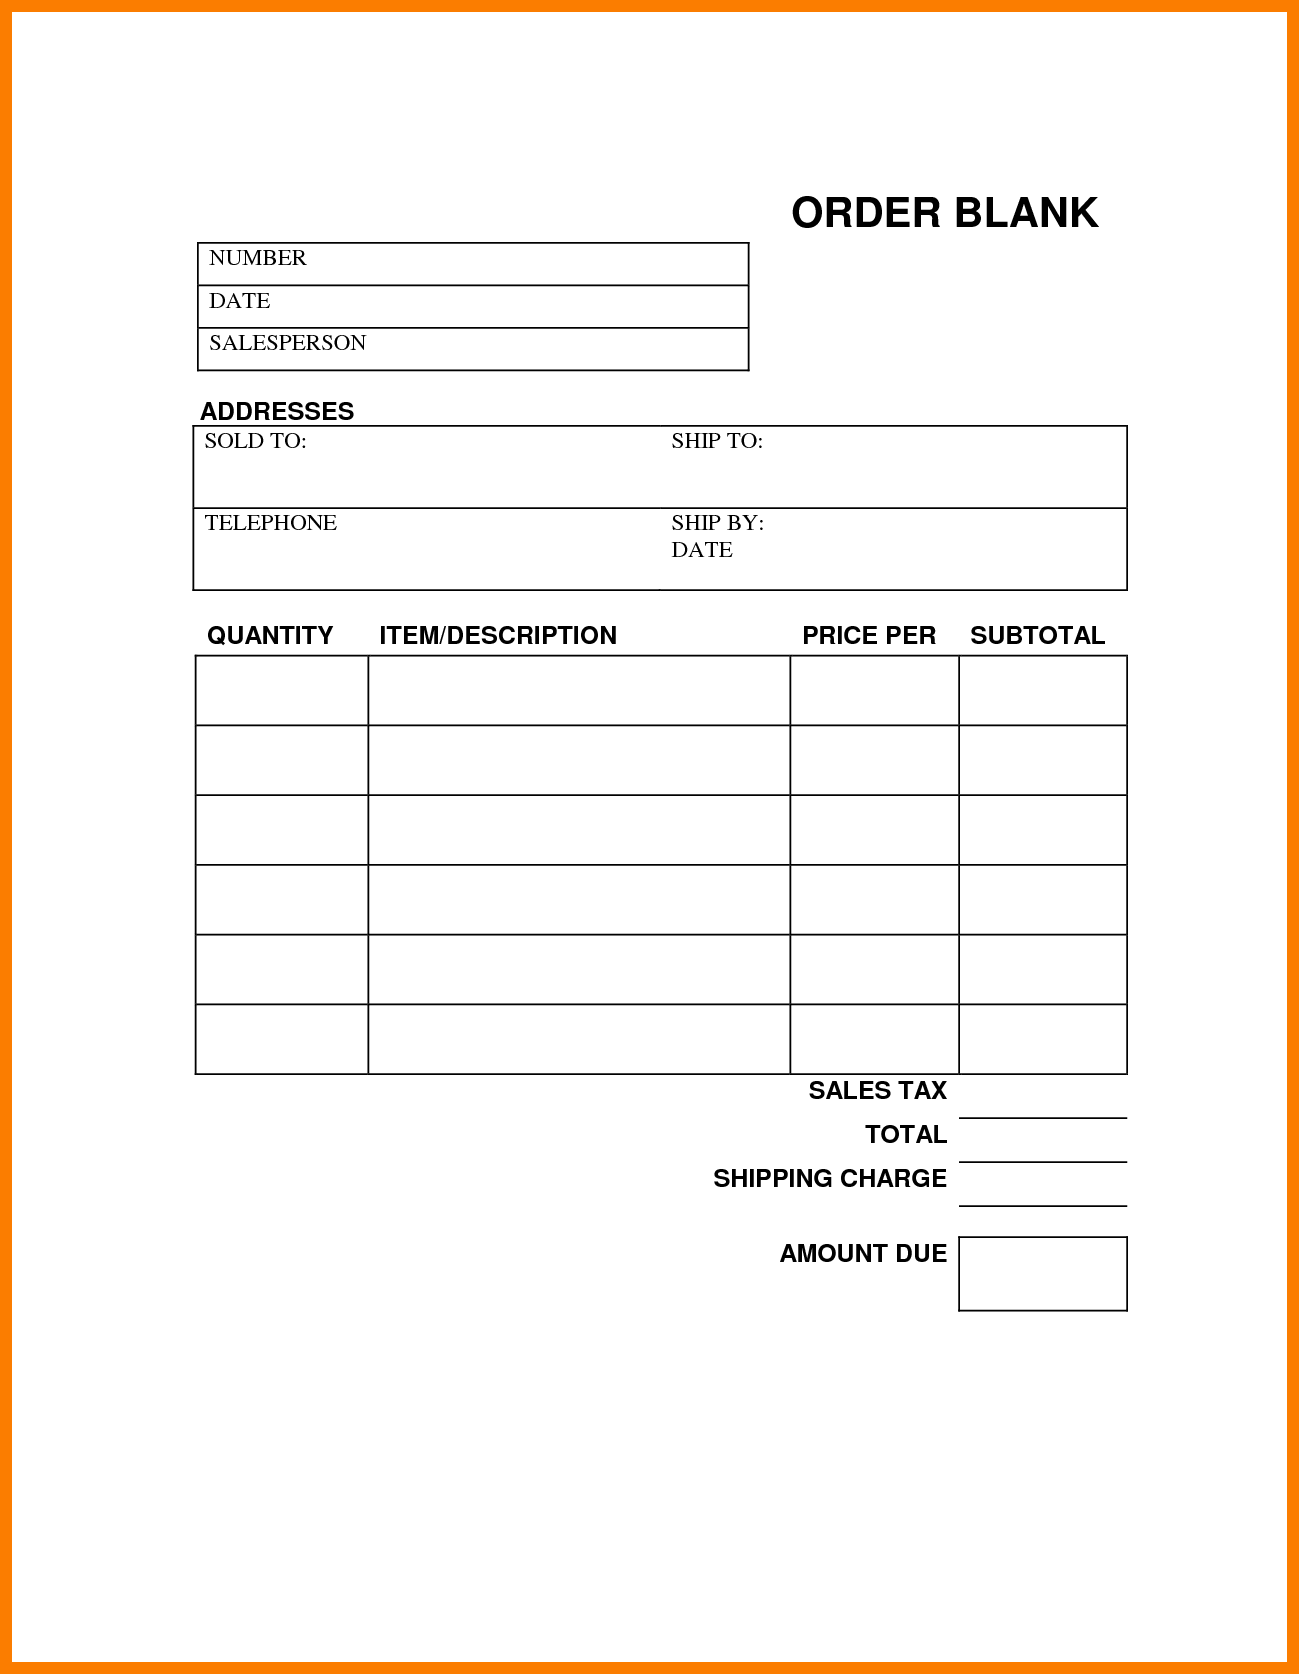 printable-order-list-form-printable-forms-free-online